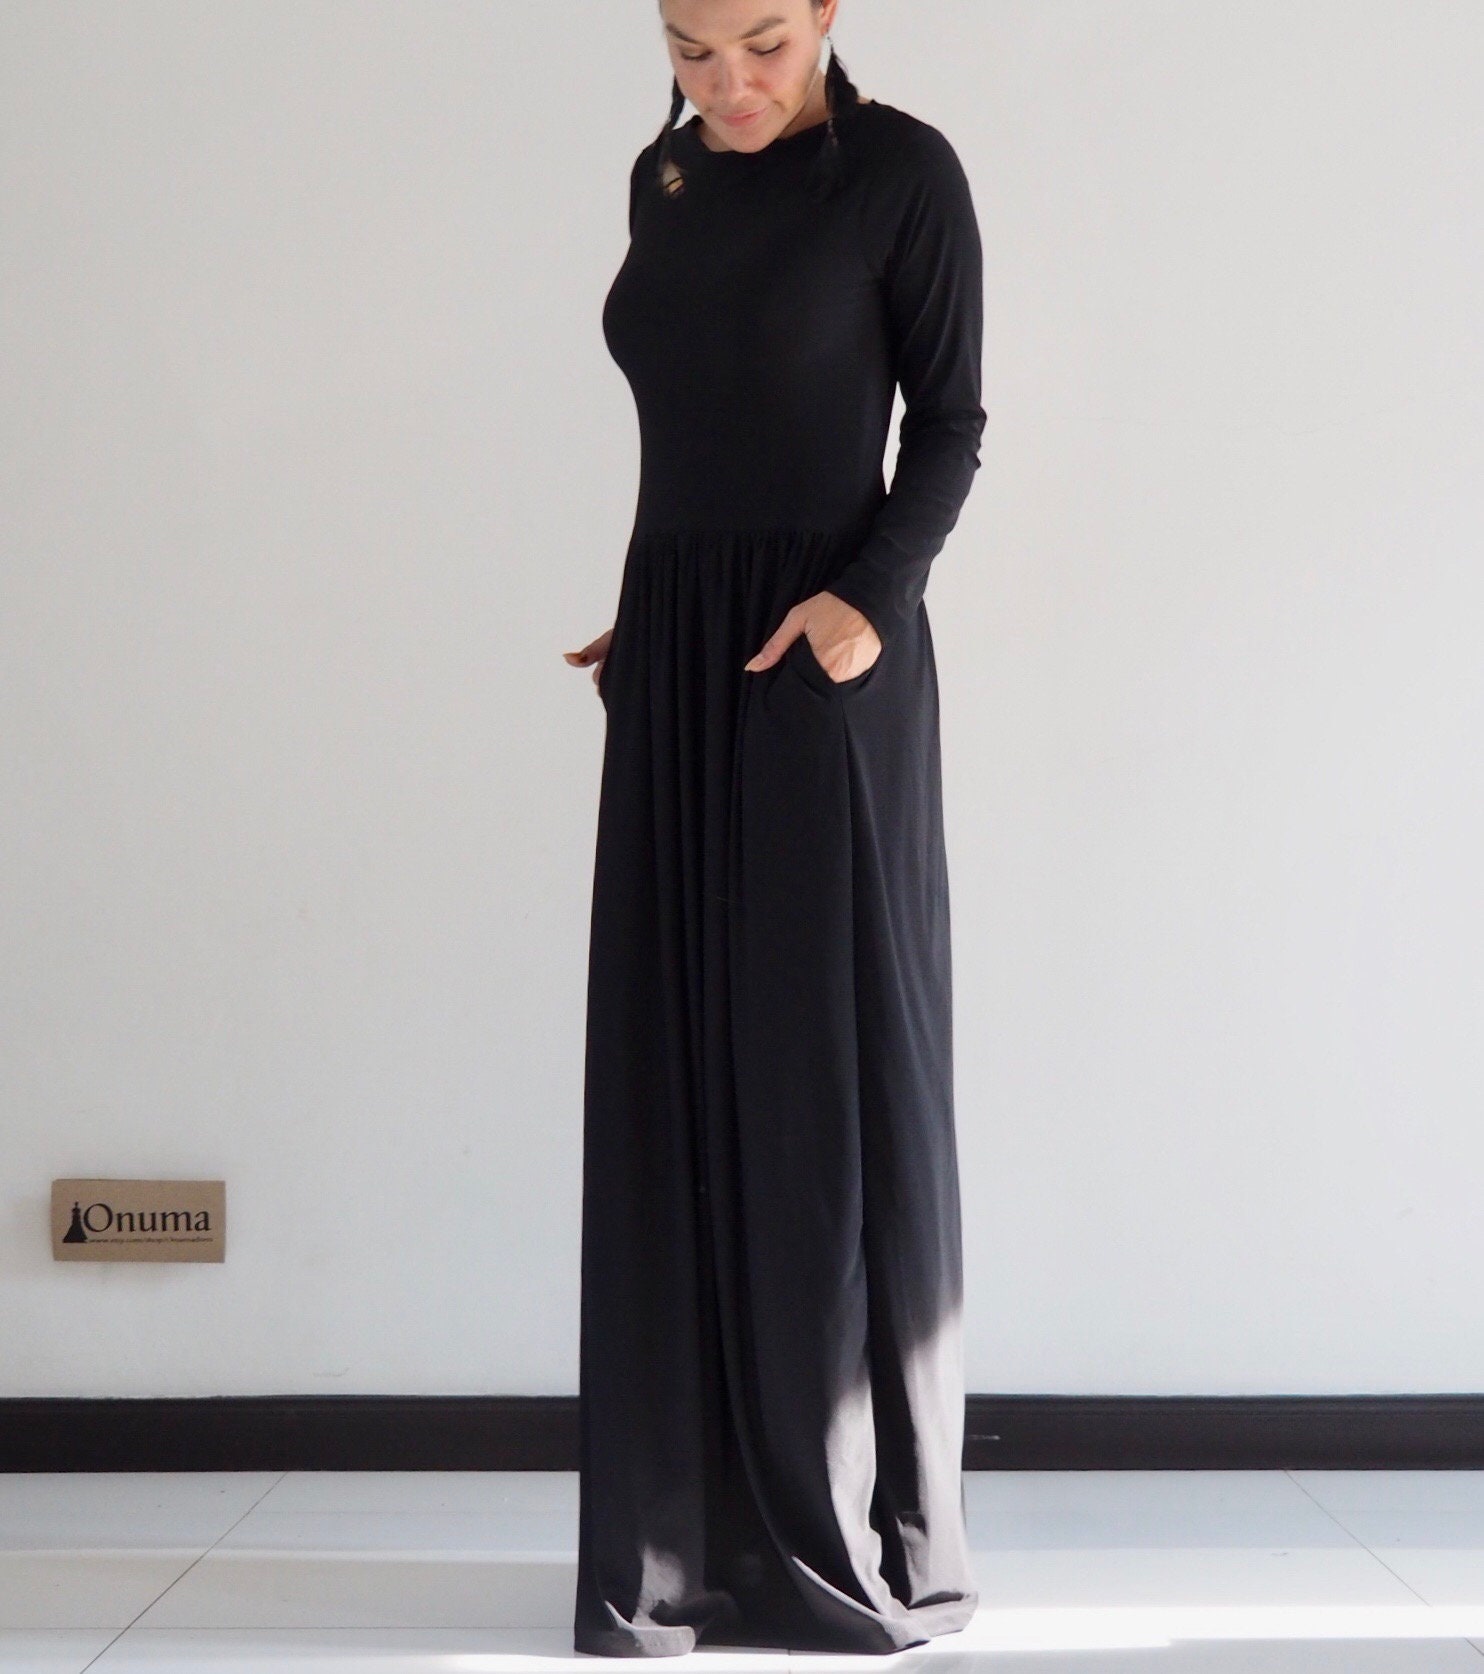 Black long sleeve dressblack dress black long dress Beach | Etsy